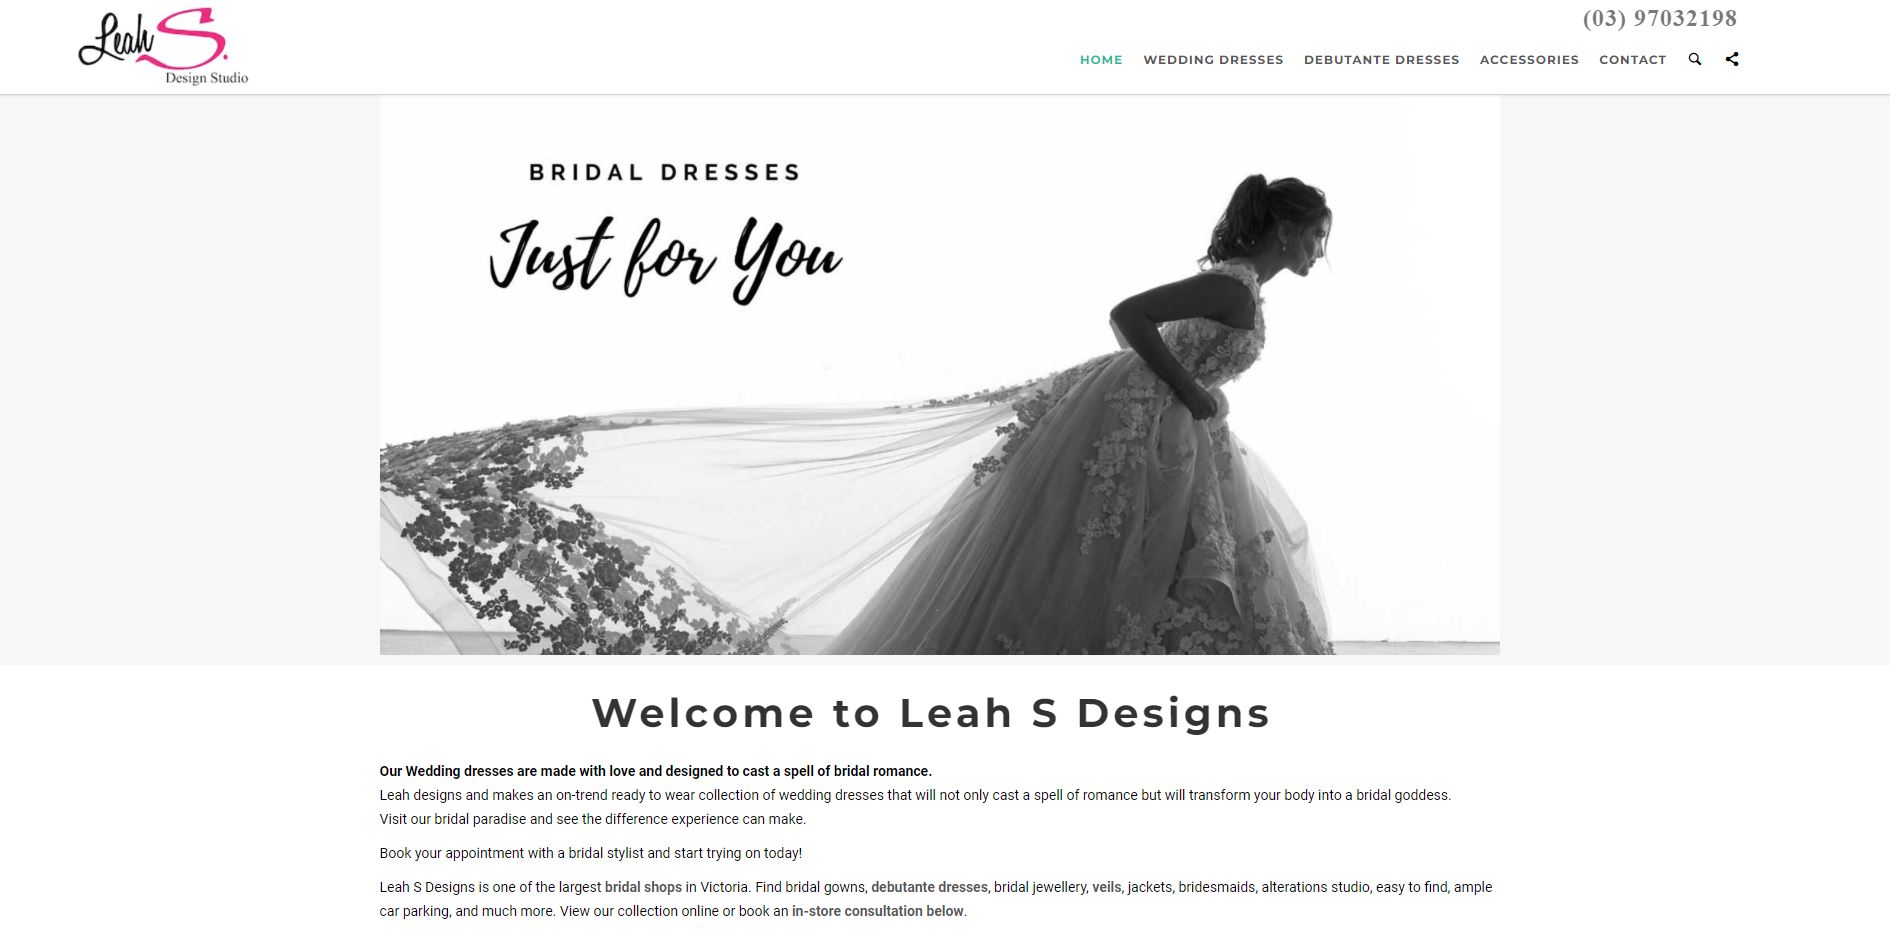 Deb dress with straps - Leah S Designs Deb, Bridal in Melbourne